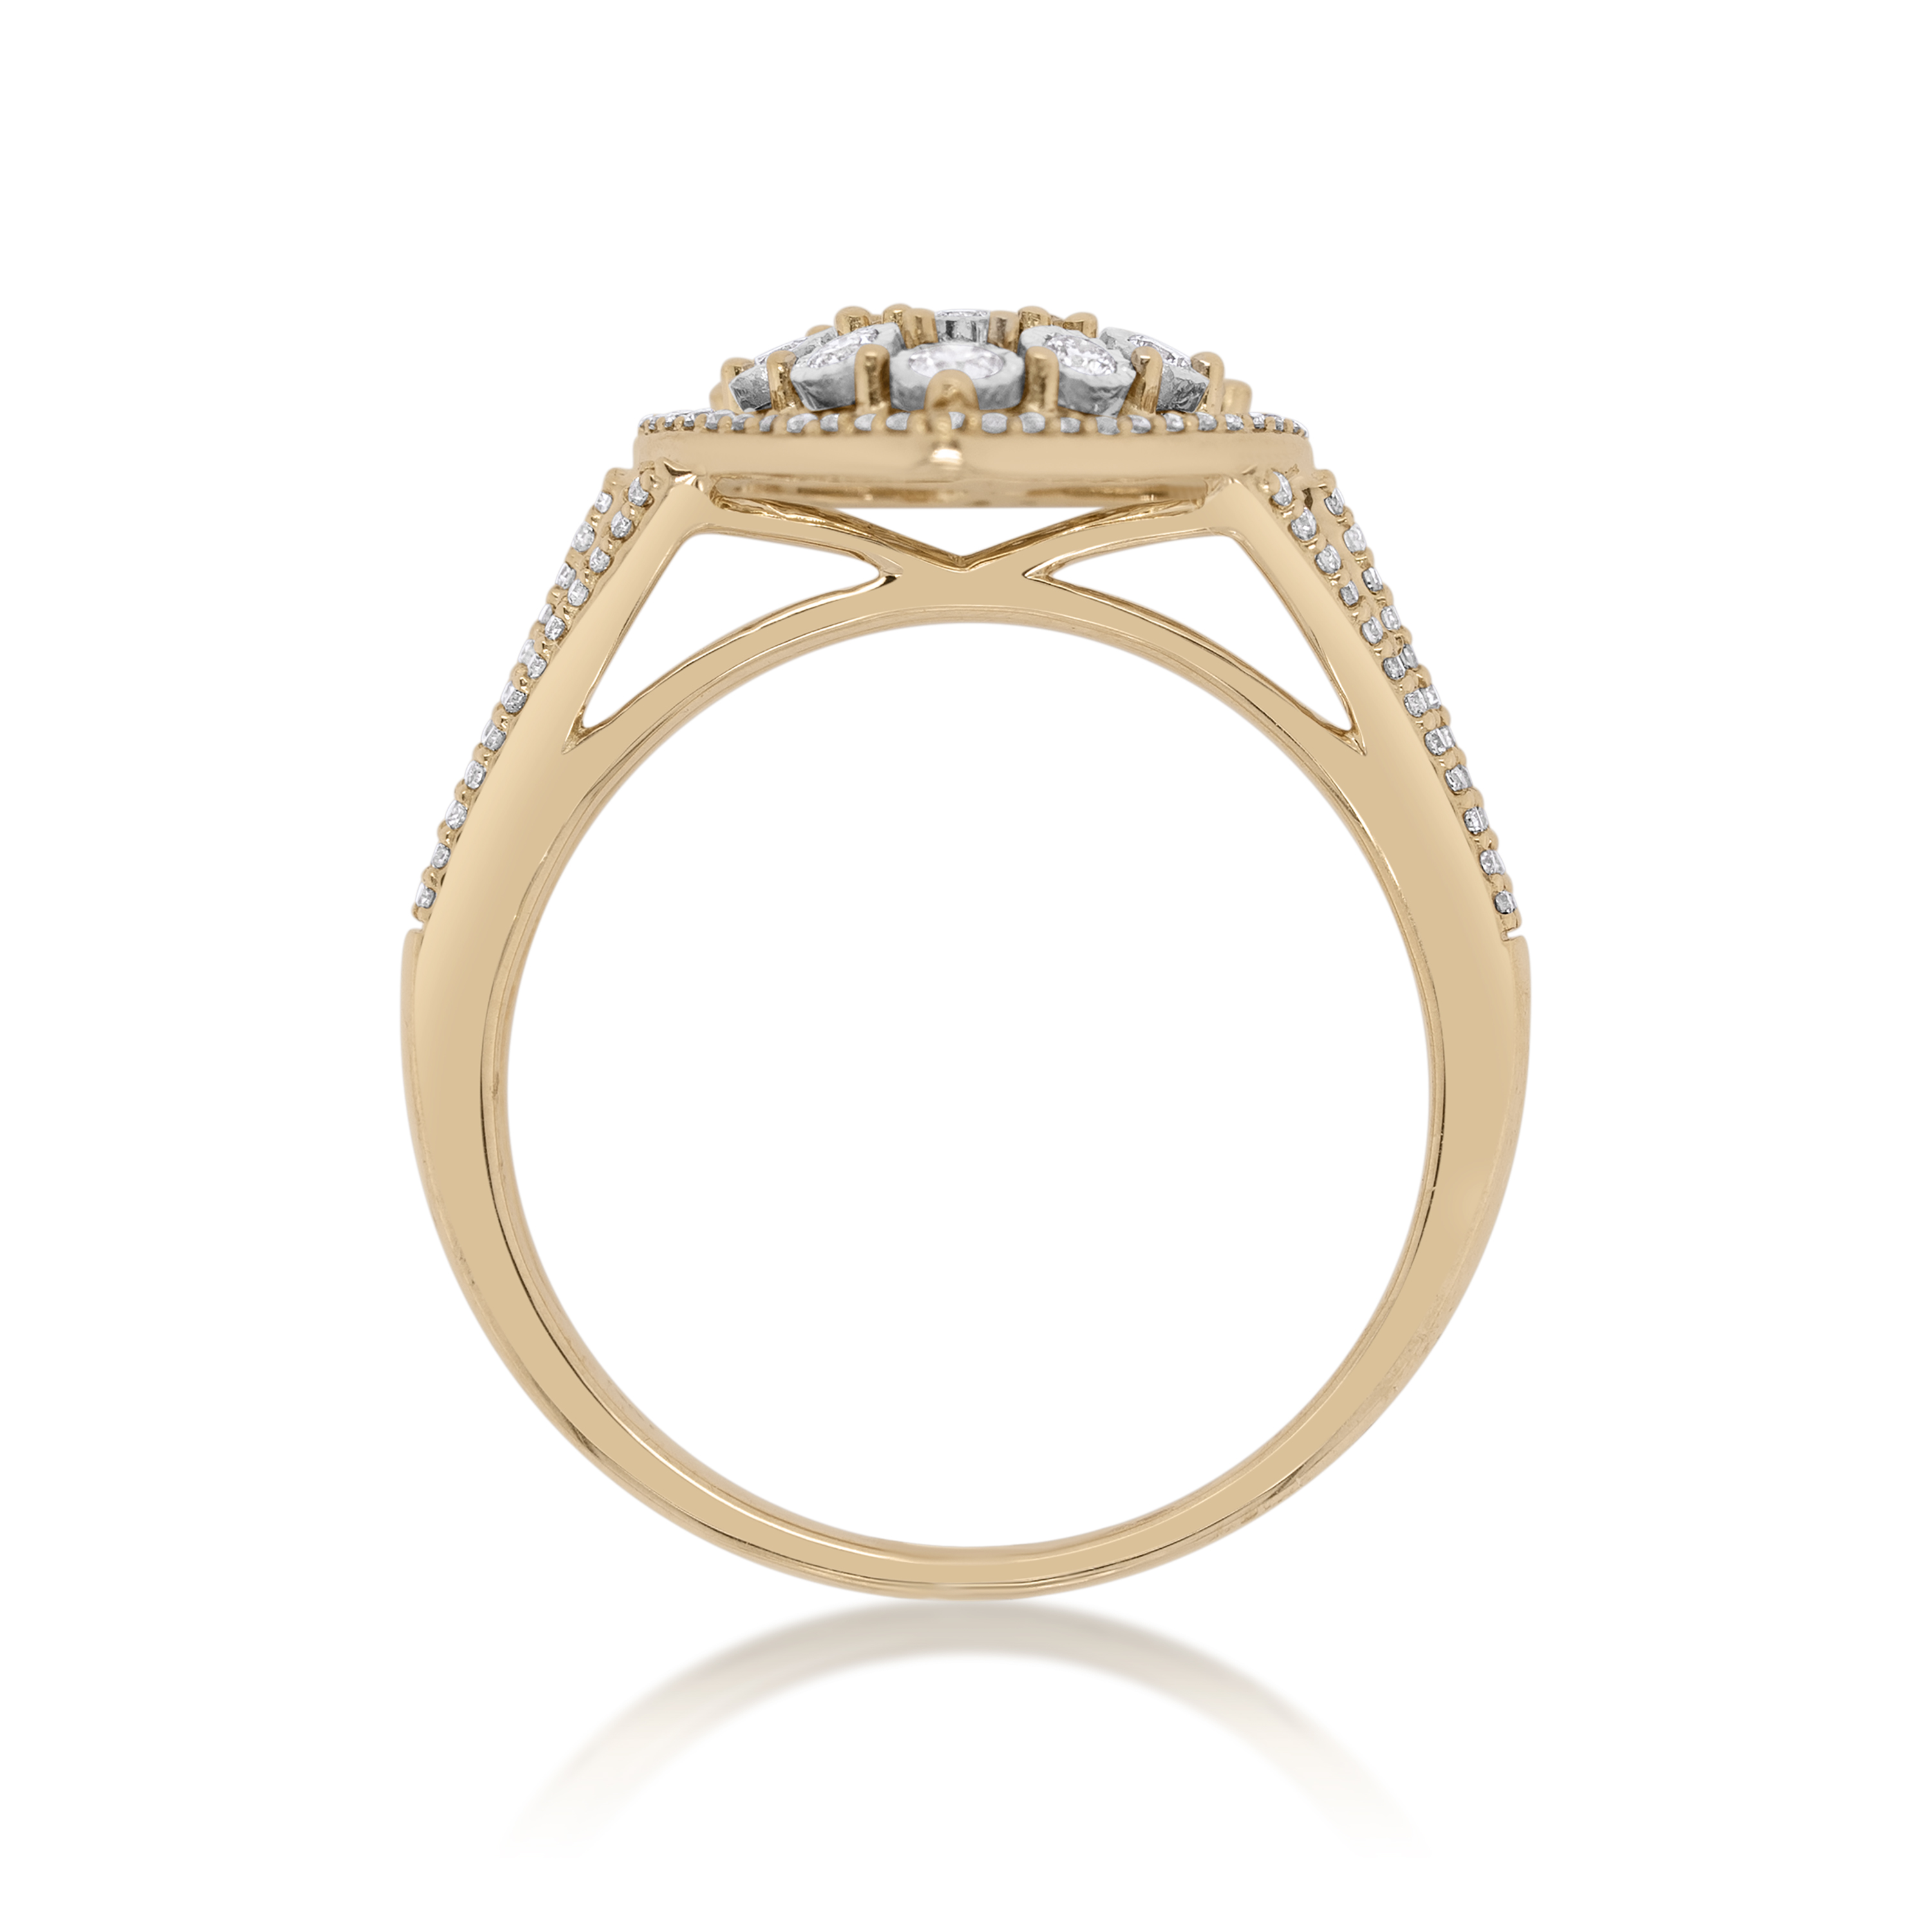 Diamond Heart Ring 0.33 ct. 14K Yellow Gold